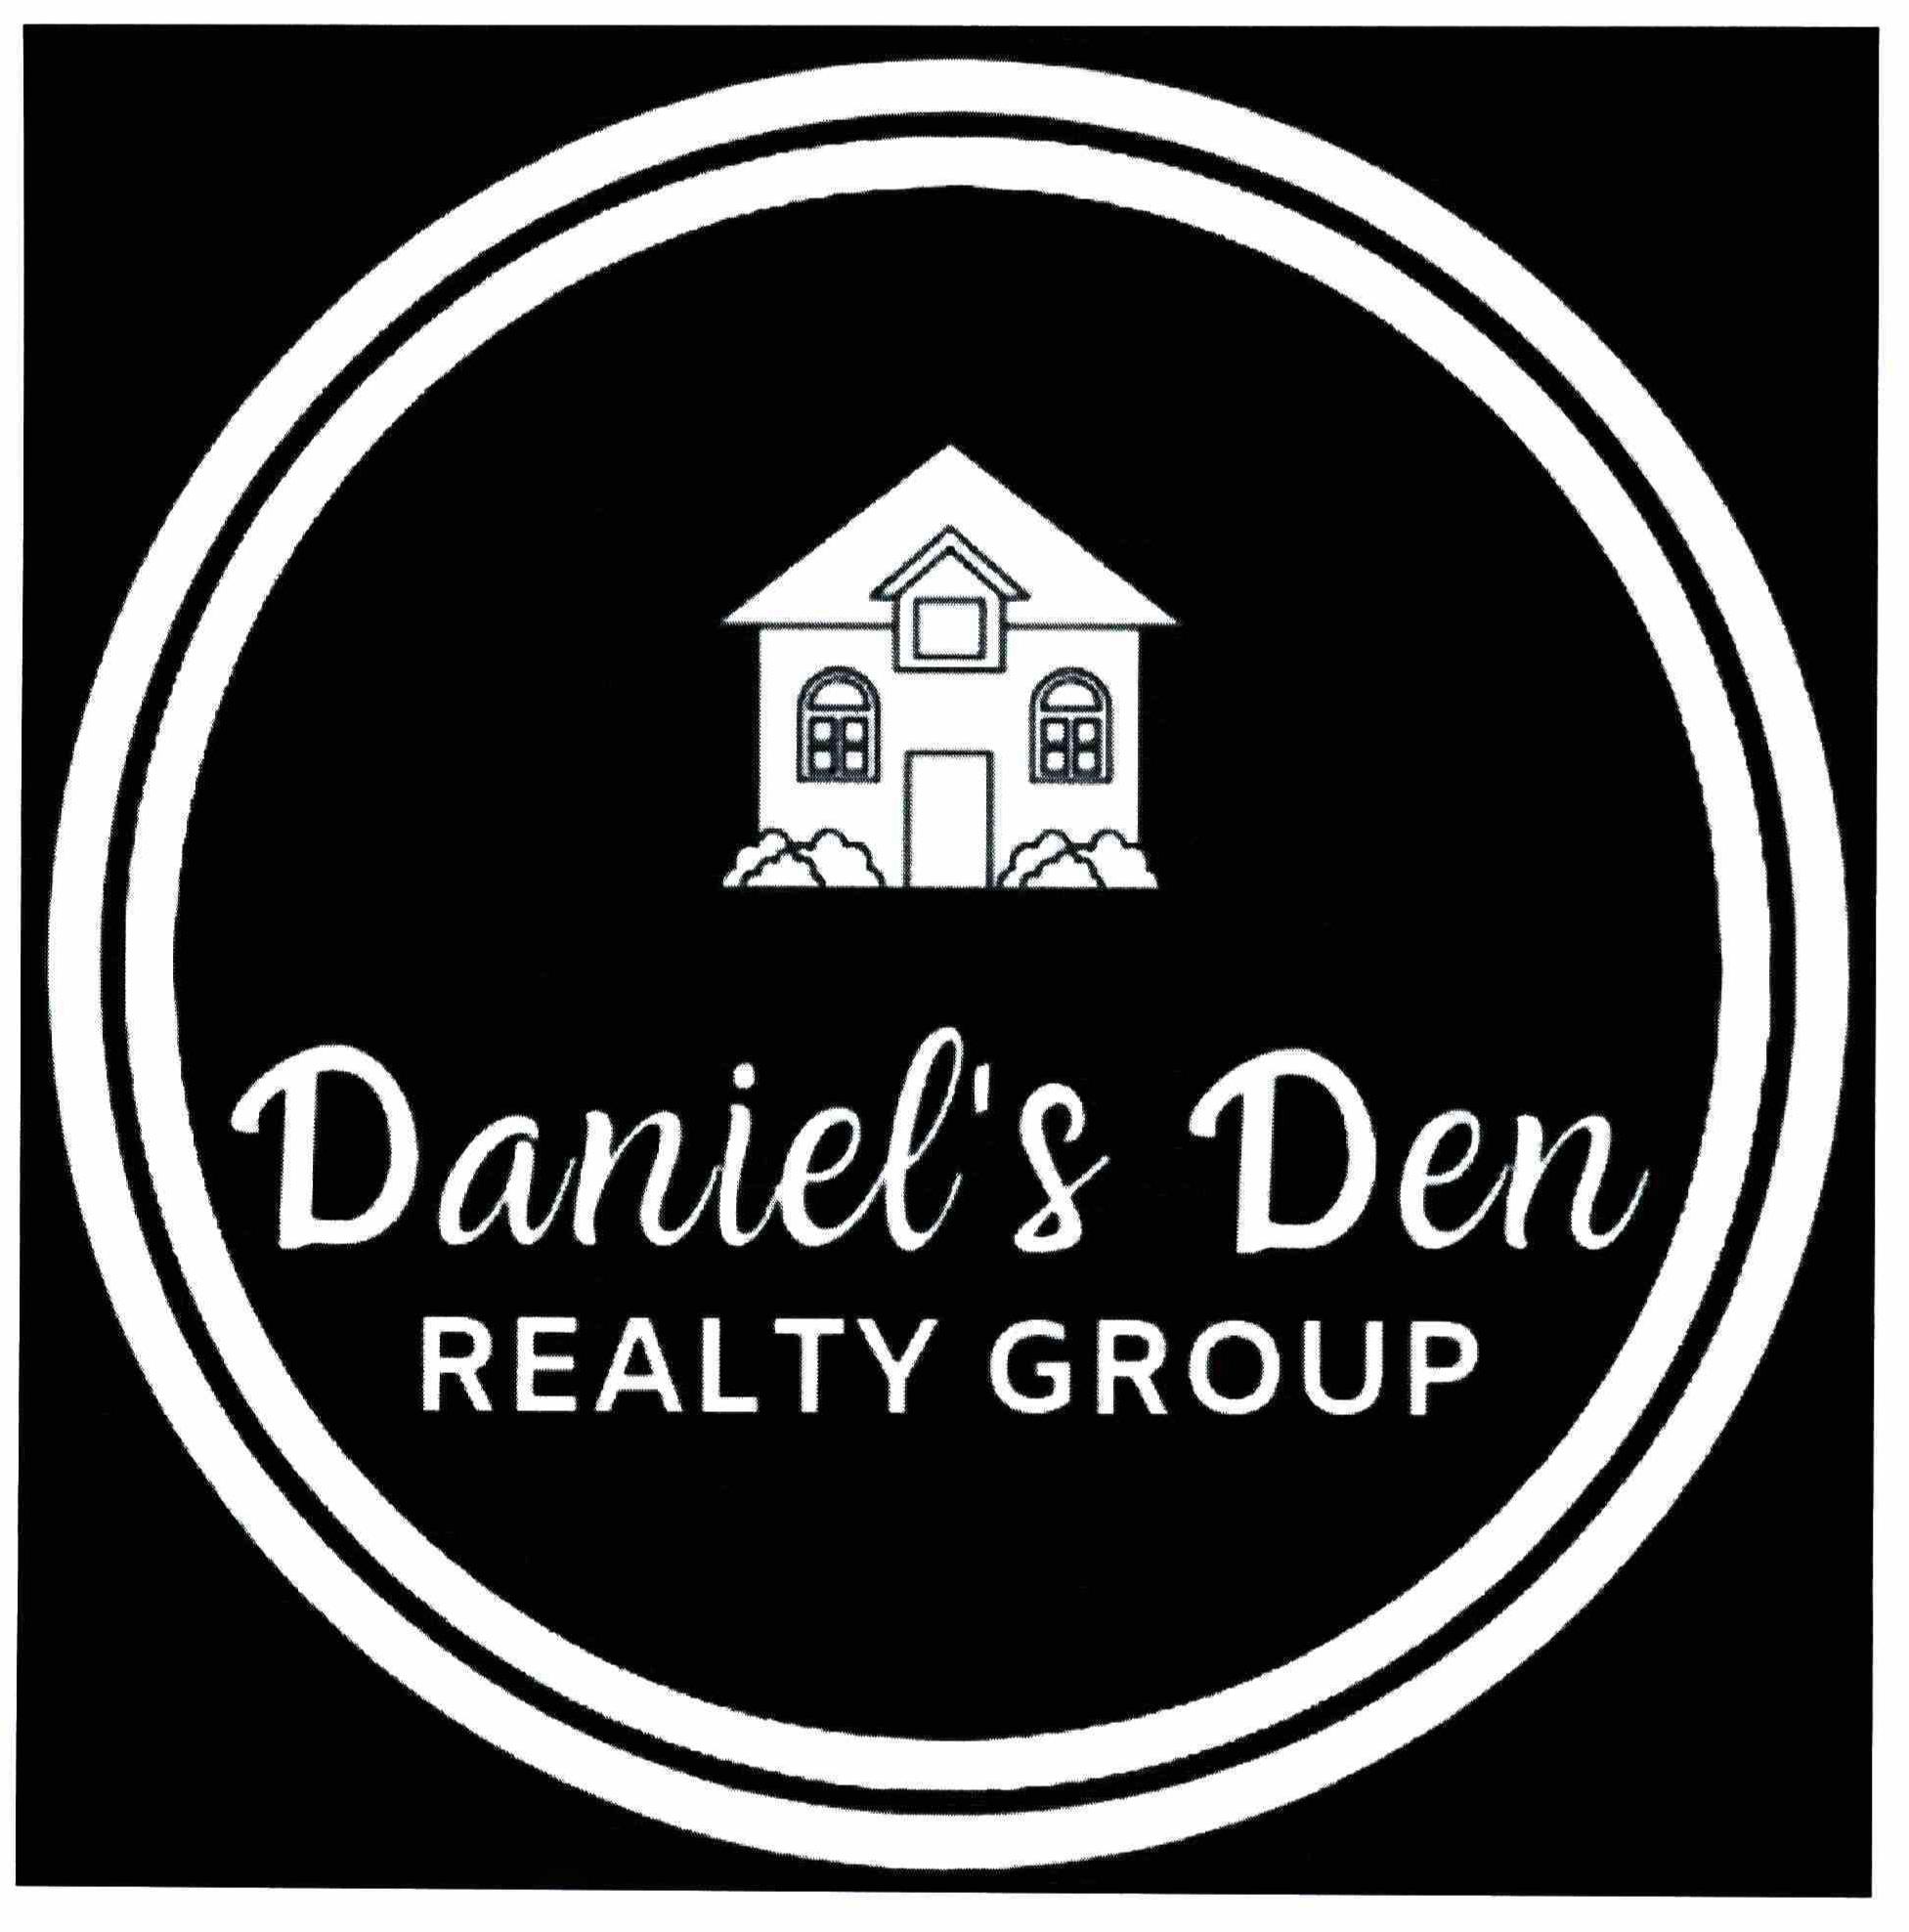  DANIEL'S DEN REALTY GROUP